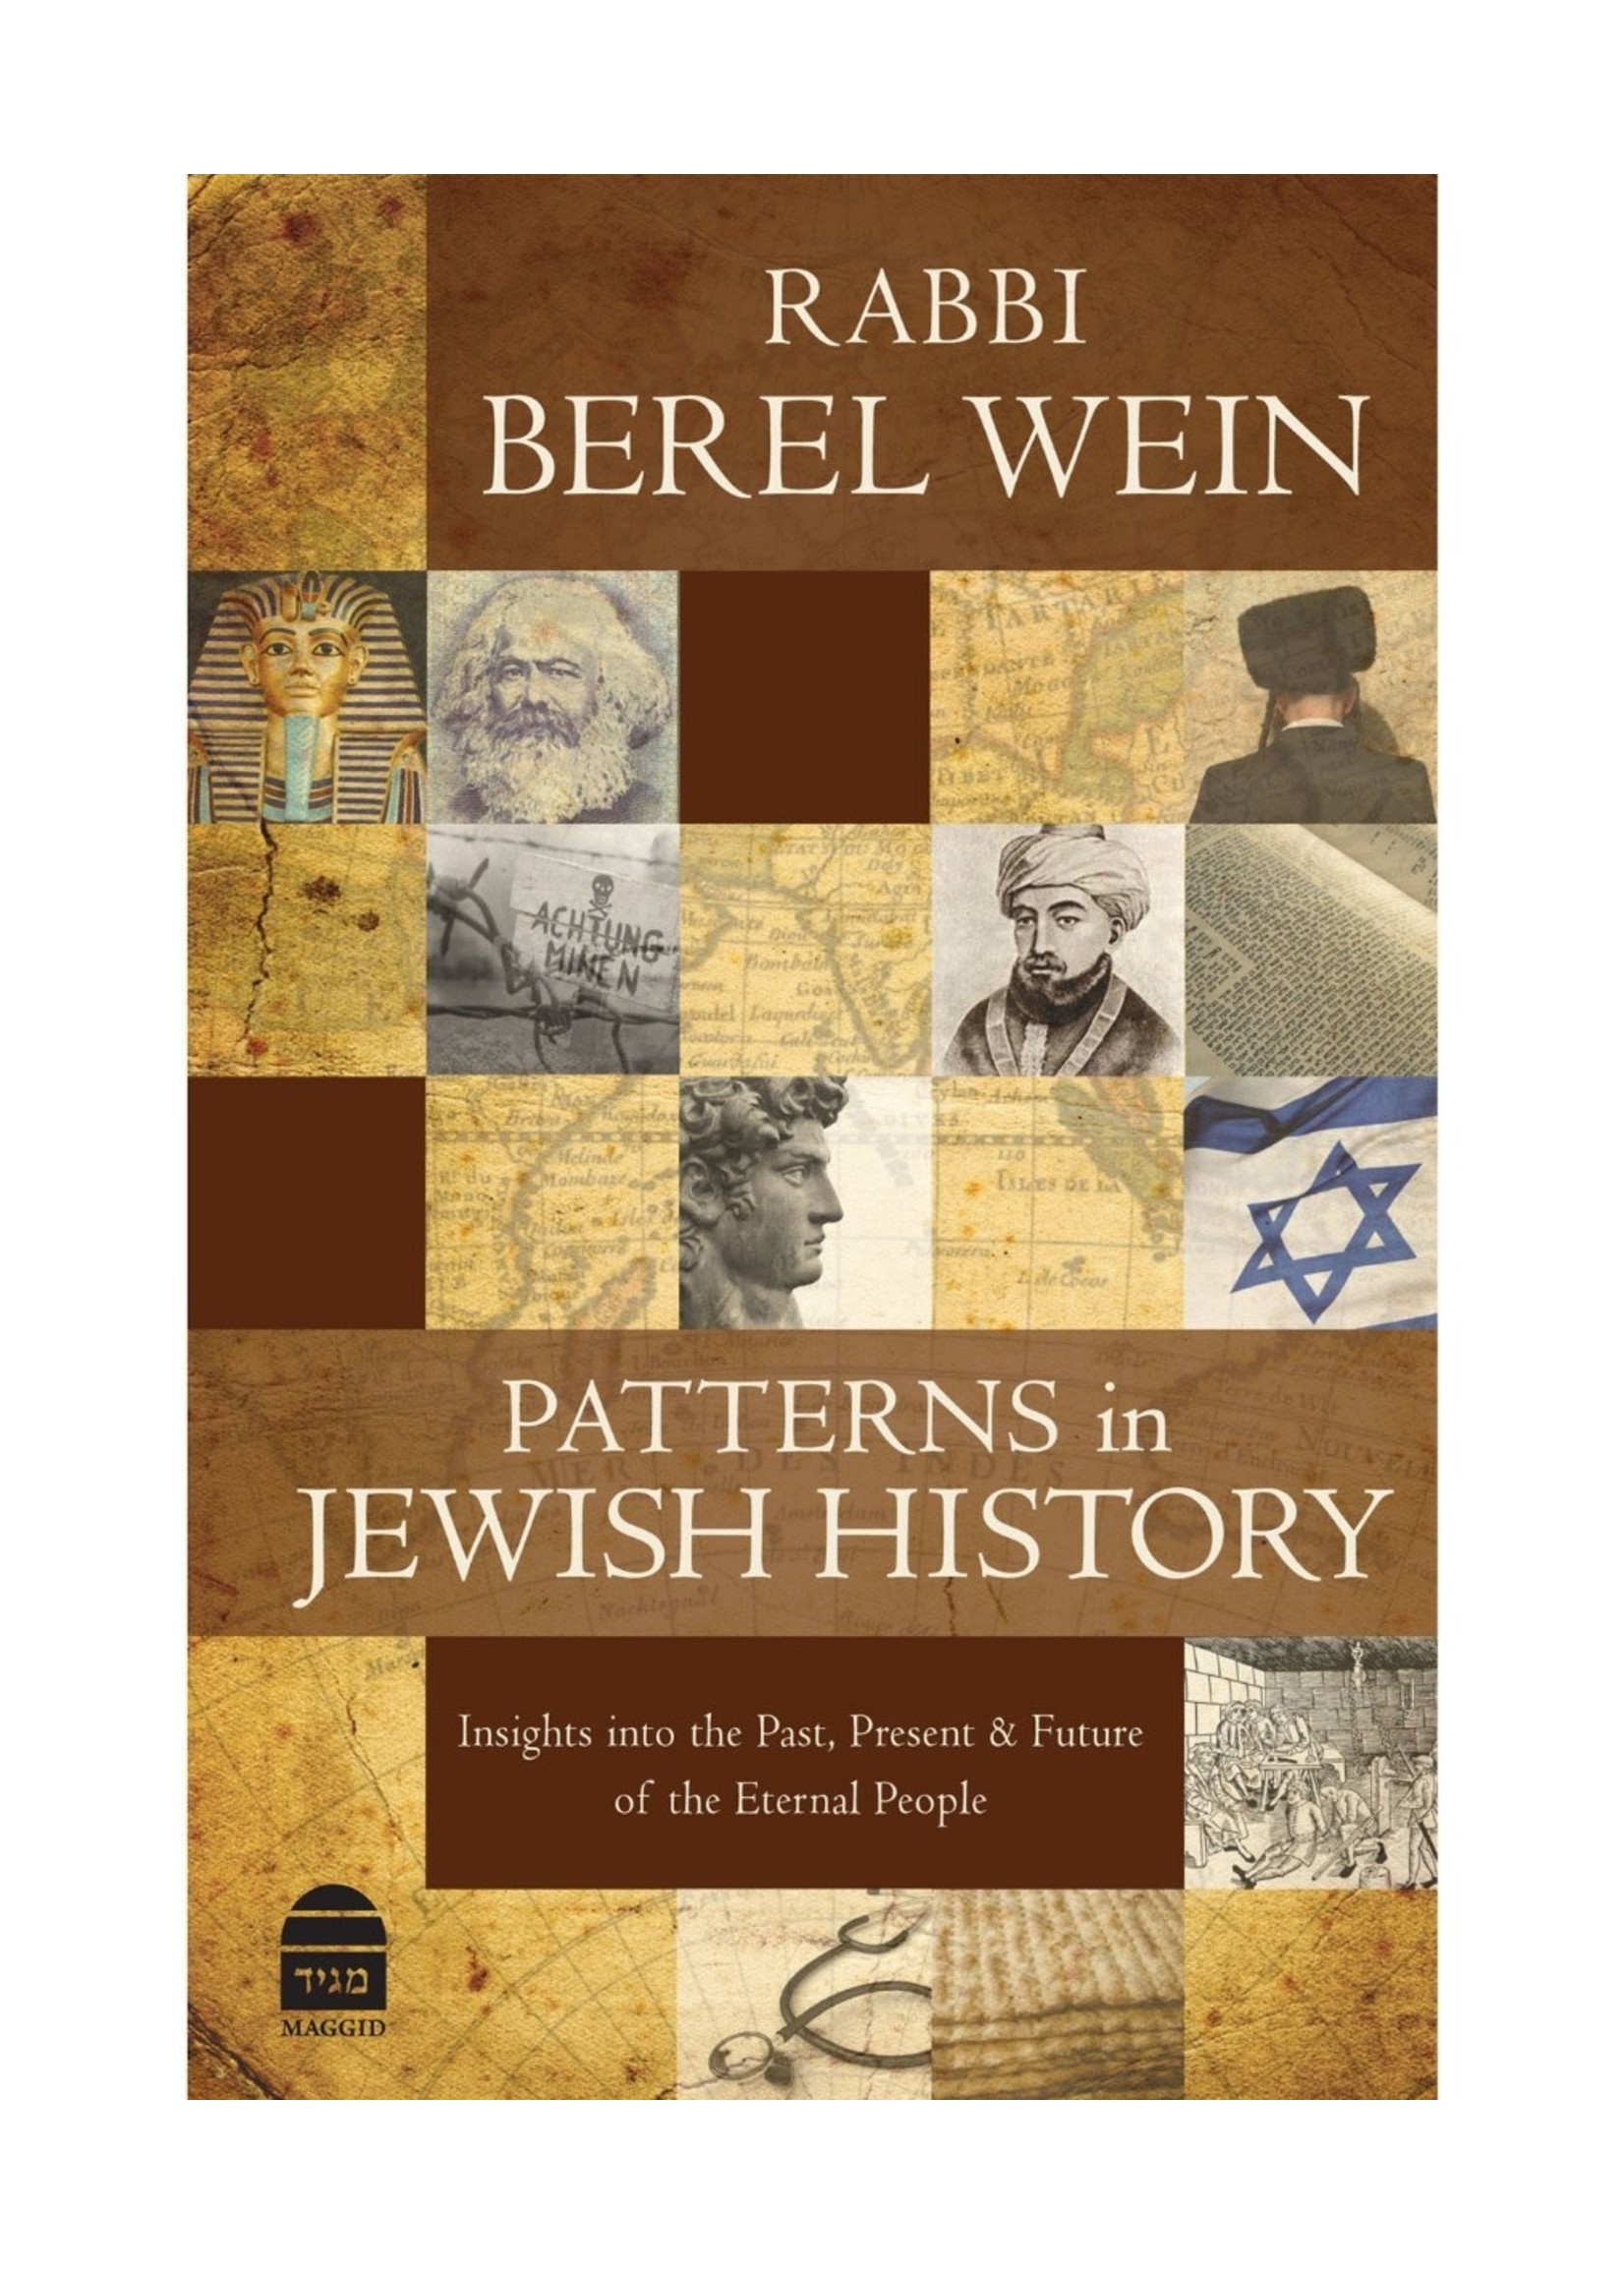 PATTERNS IN JEWISH HISTORY